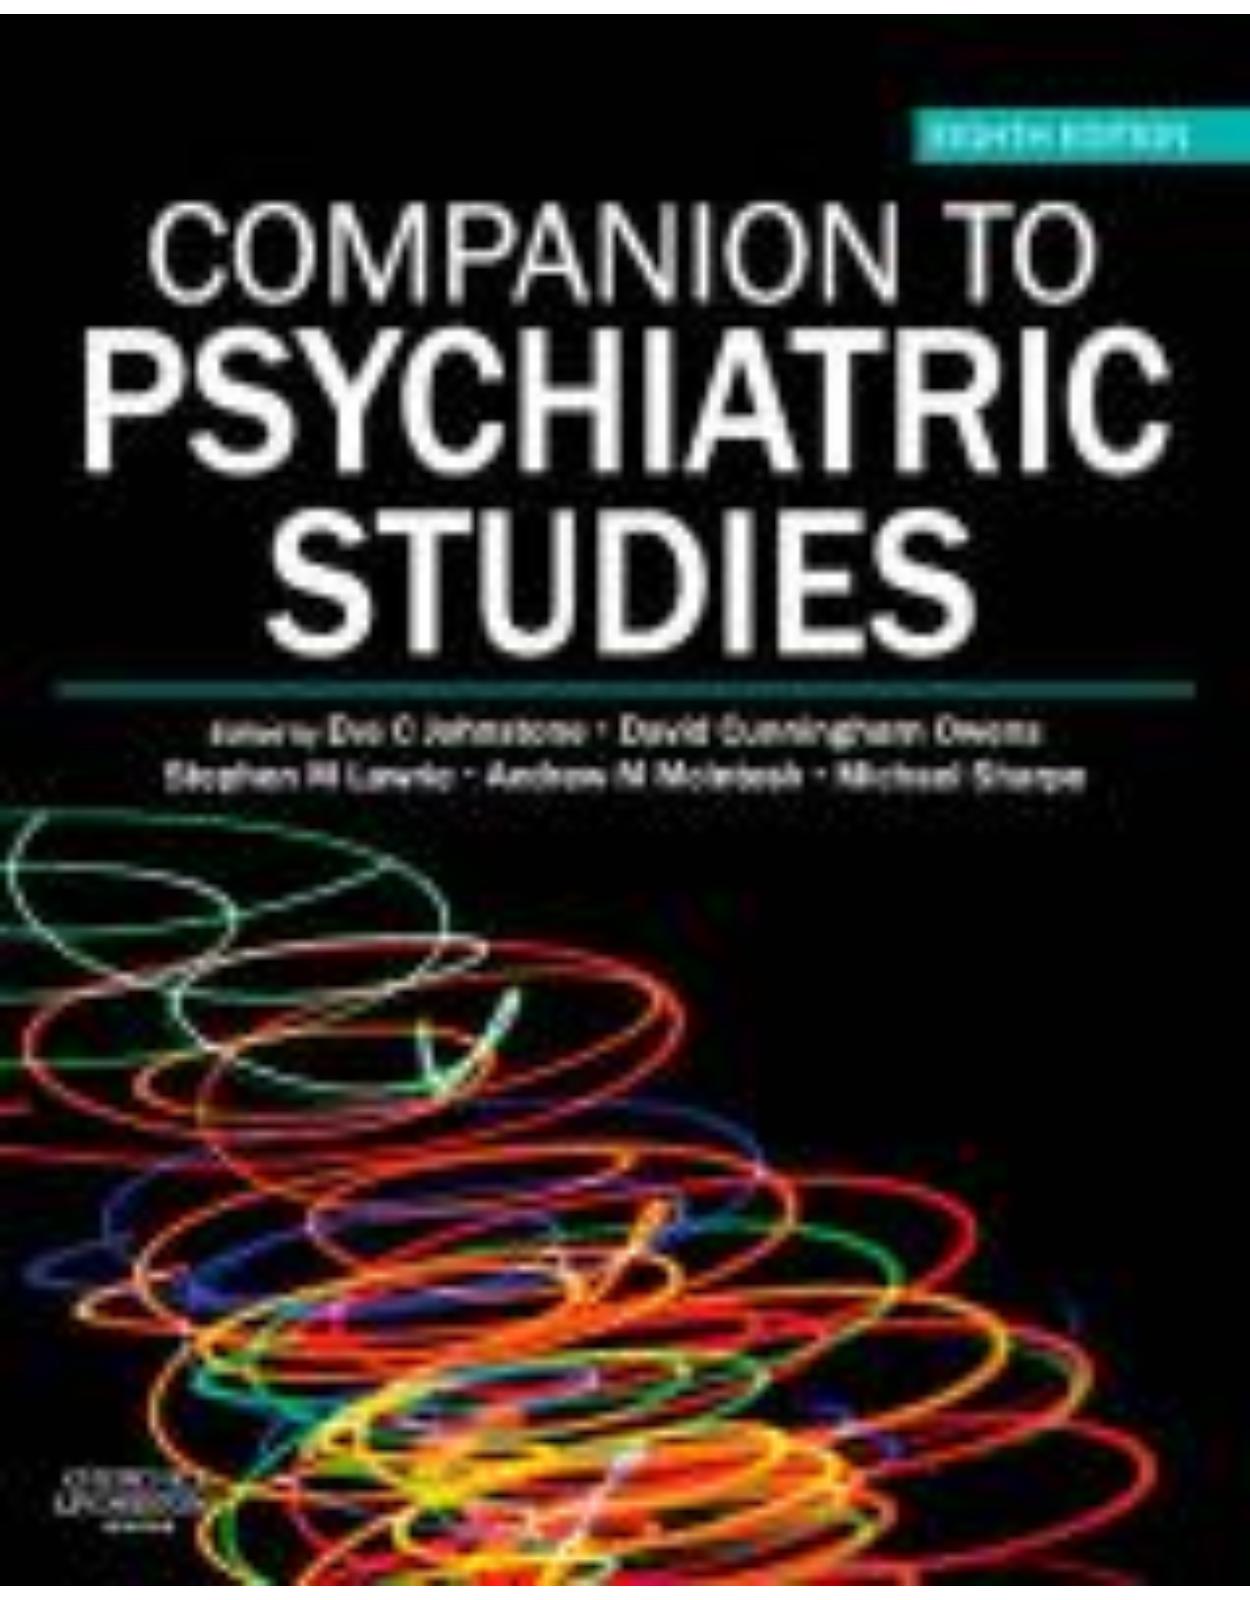 Companion to Psychiatric Studies, 8th Edition